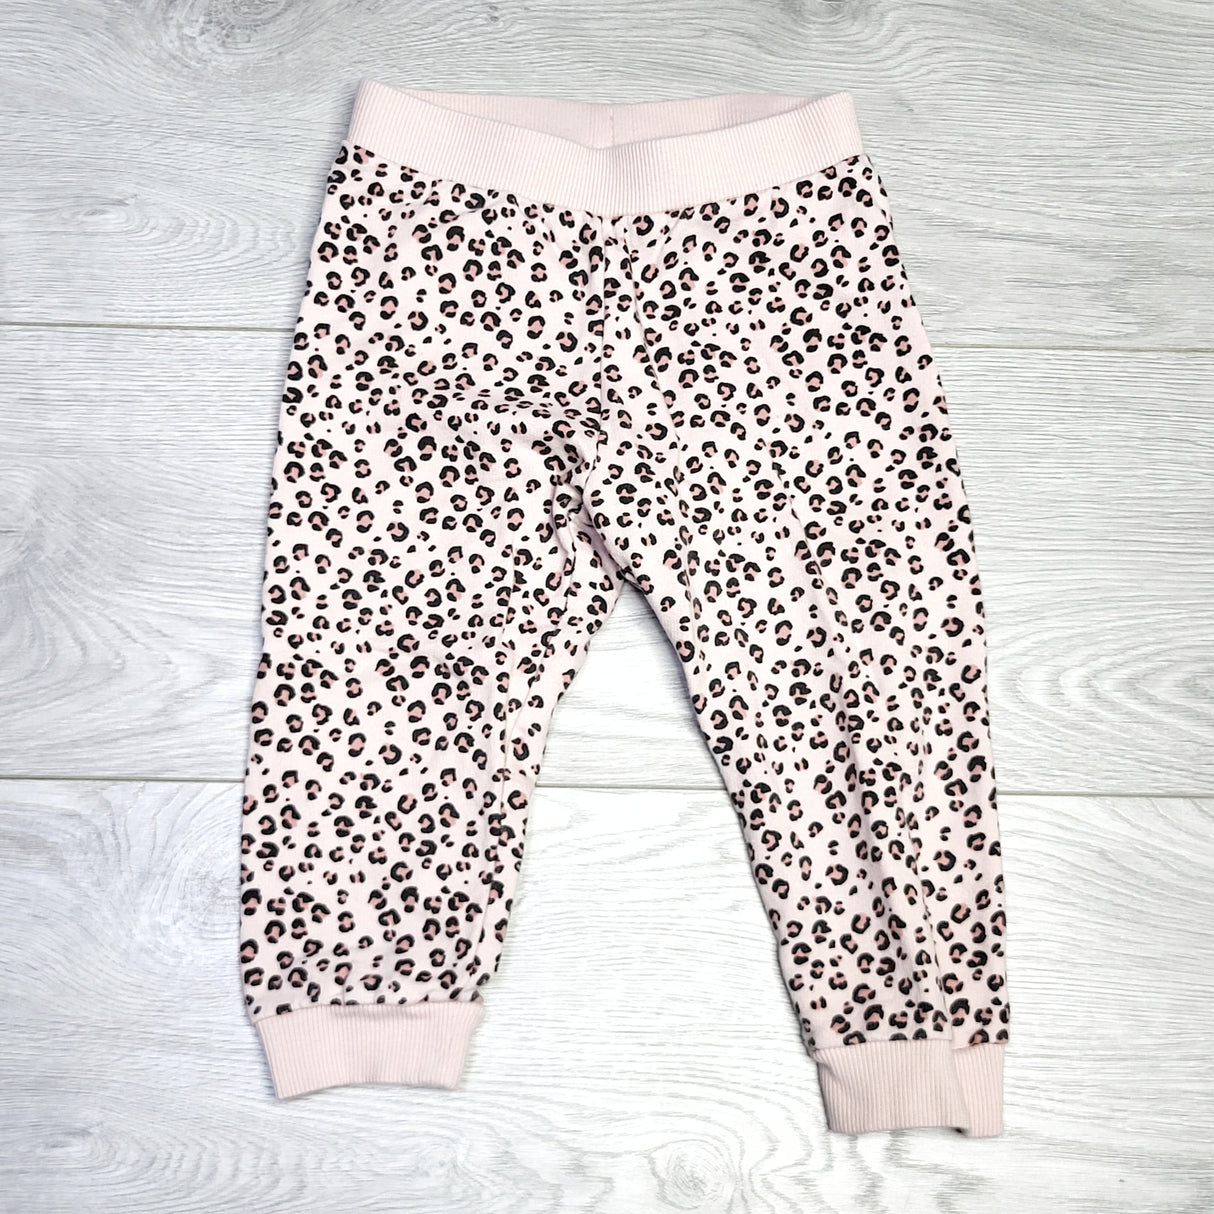 KJHN2 - H and M pink leopard print sweatpants. Size 12-18 months